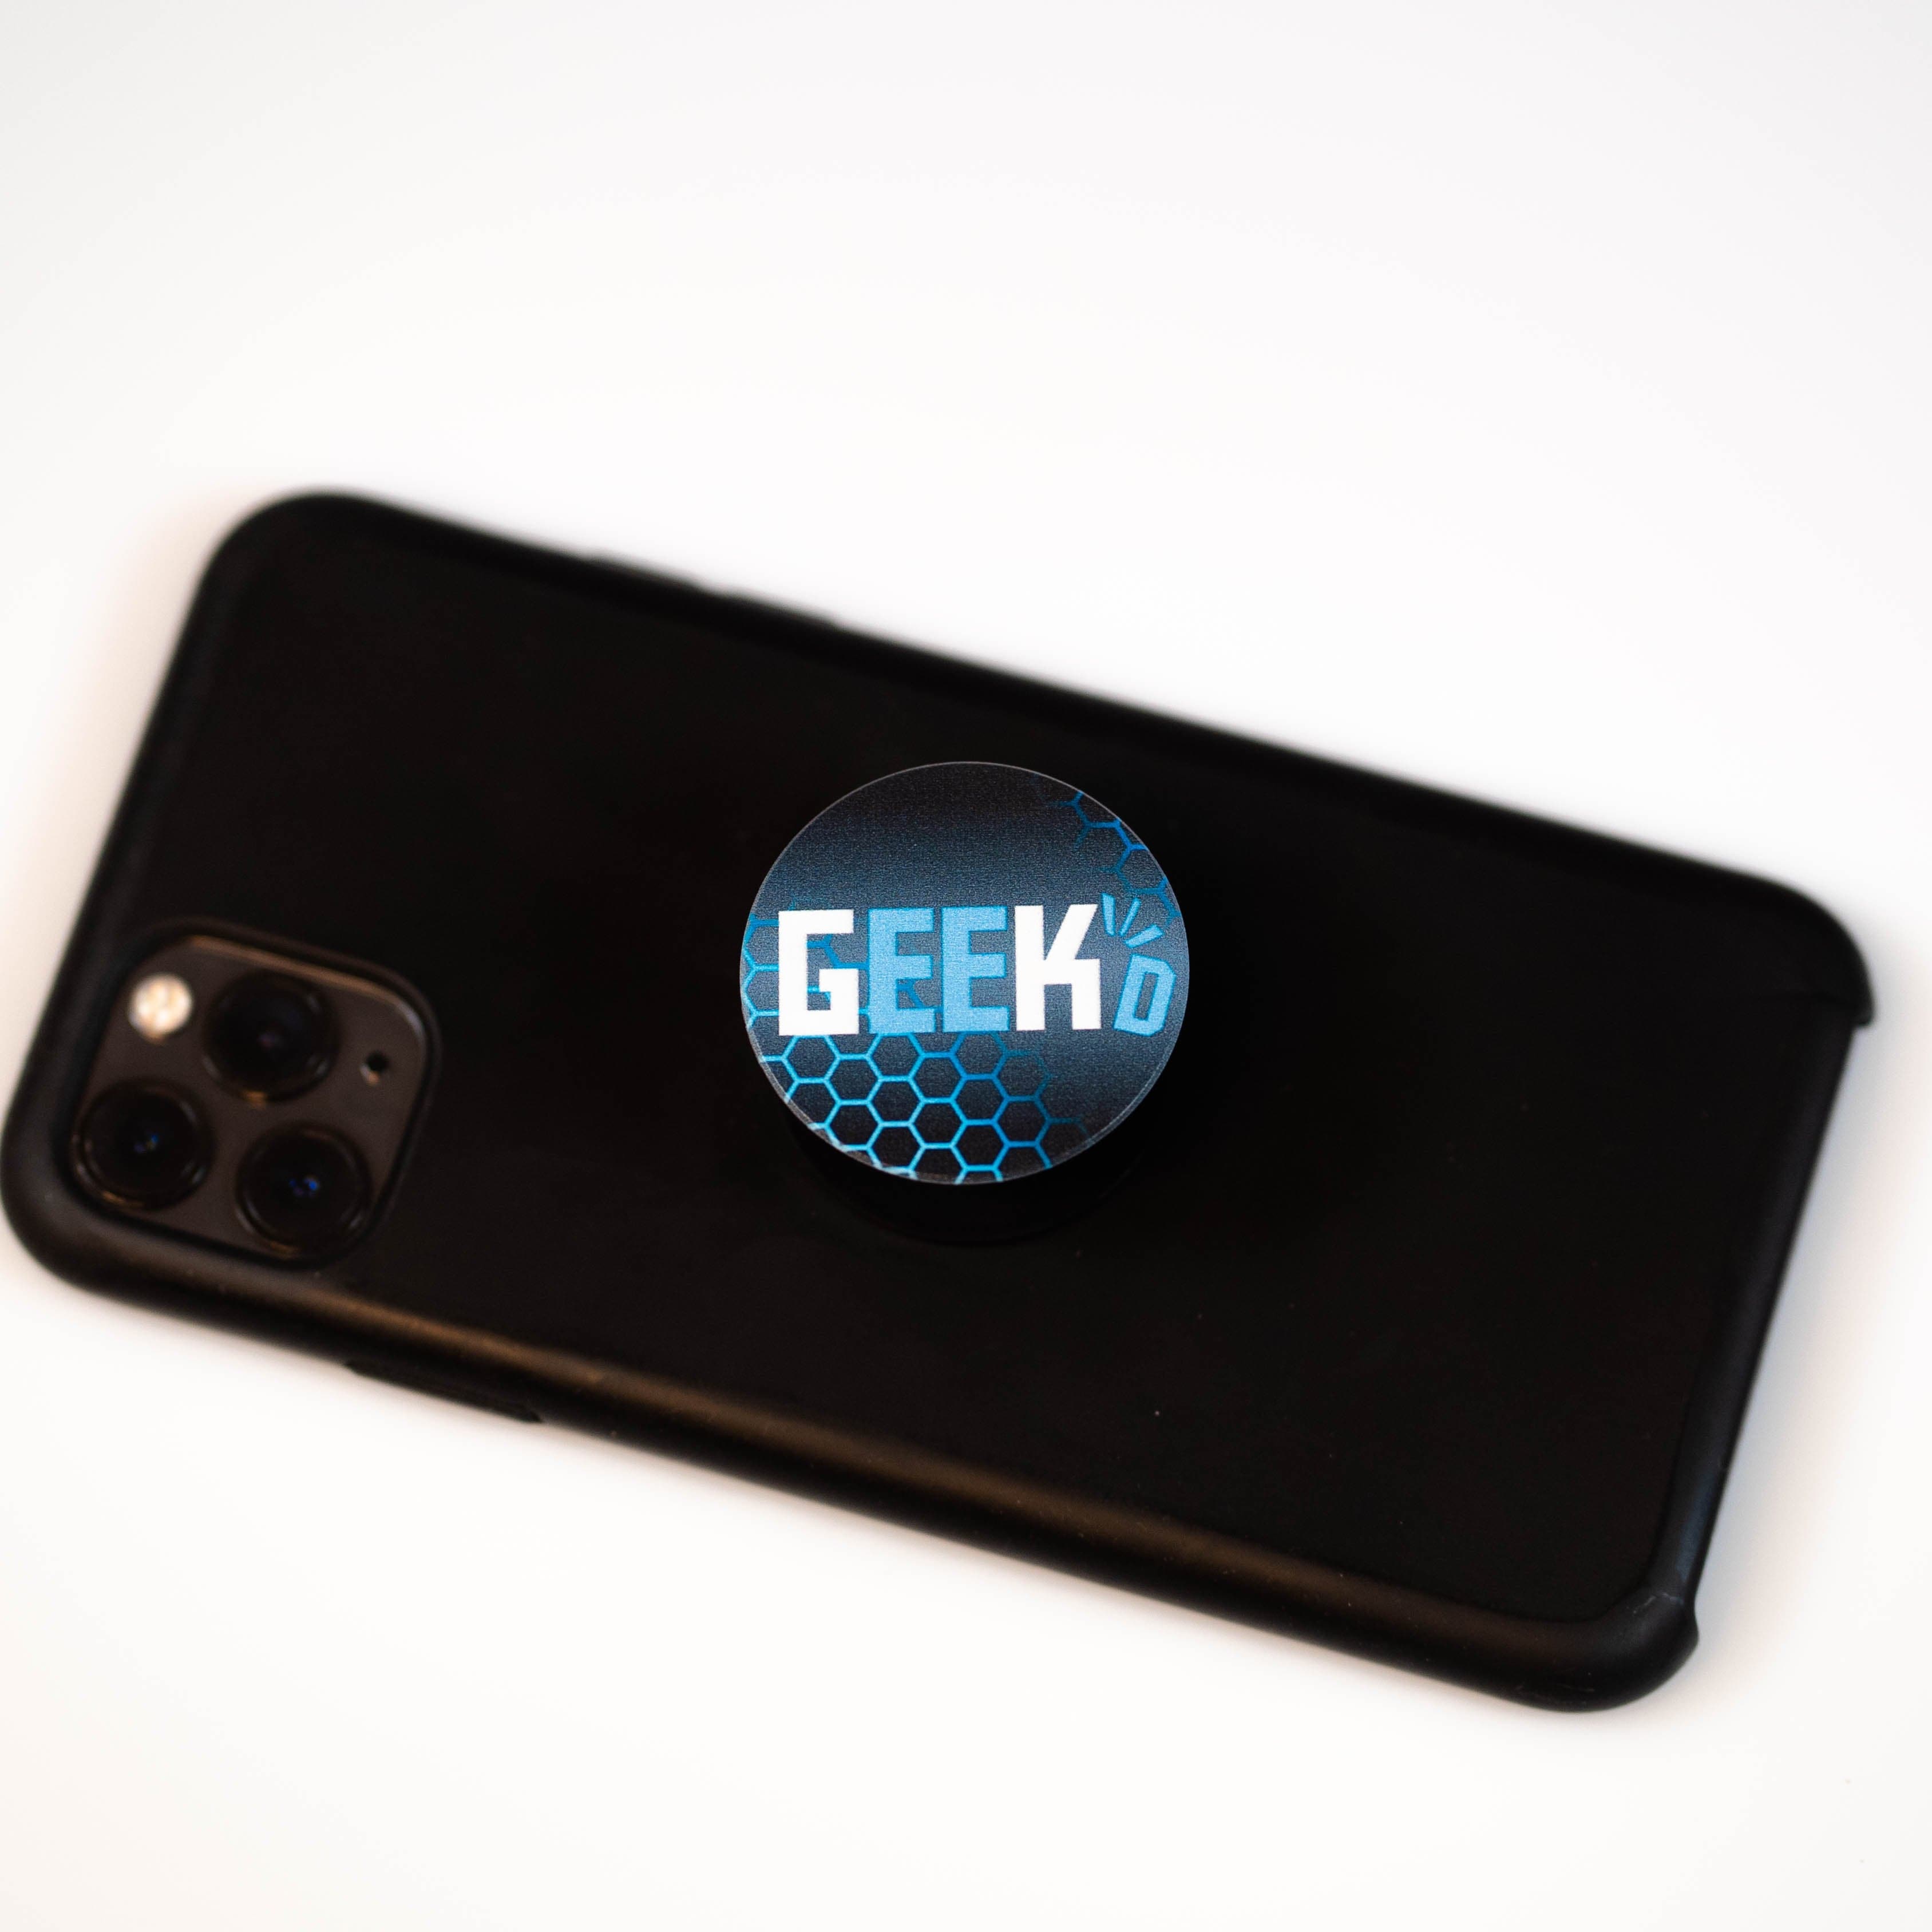 Geekd PhoneSocket